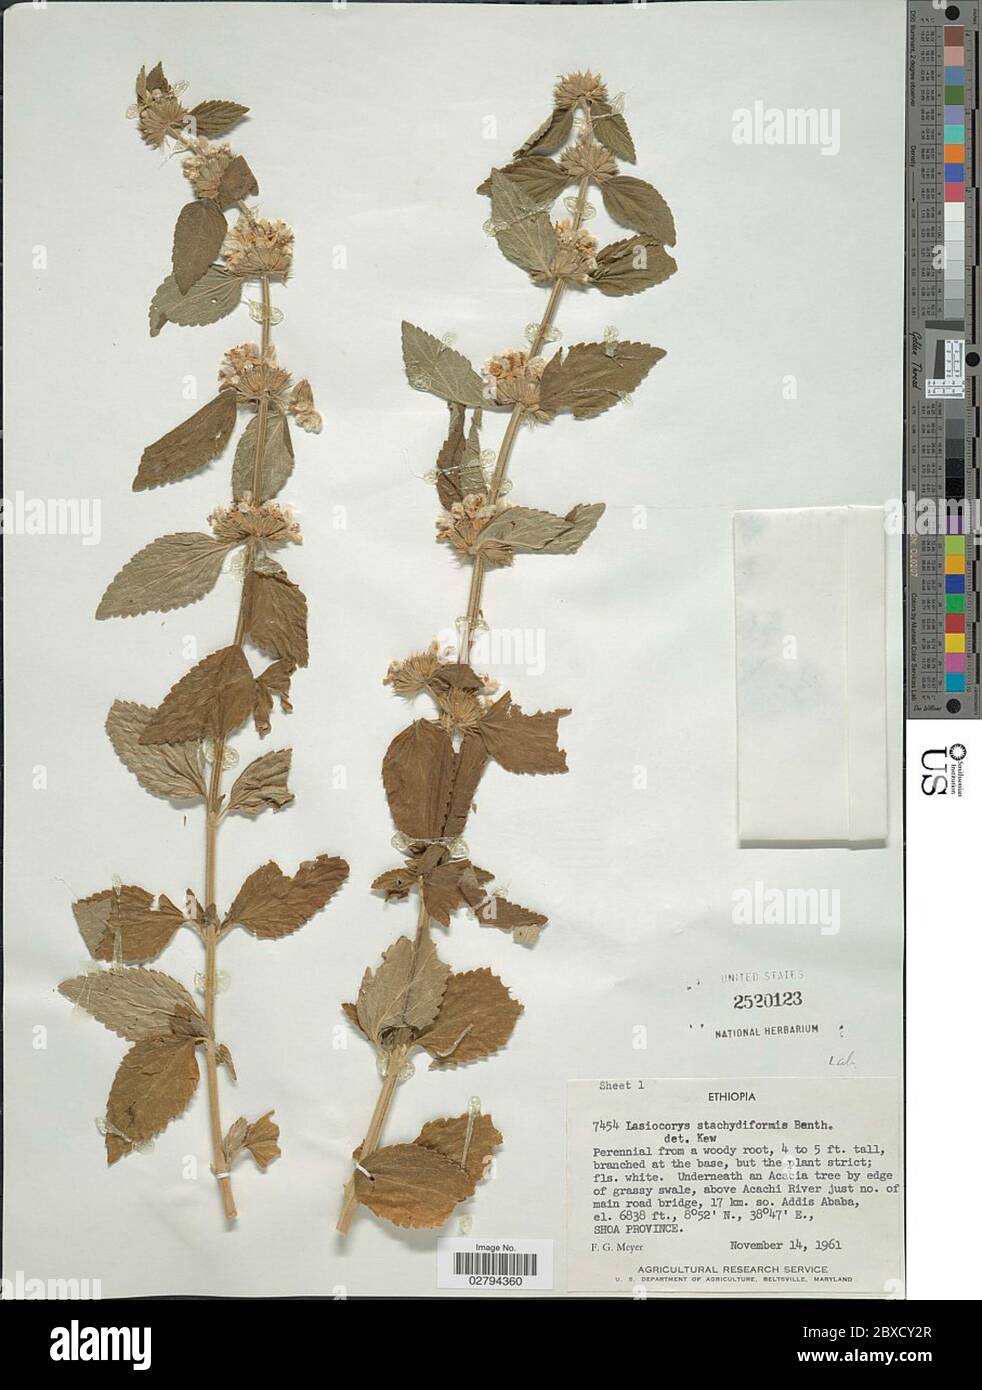 Leucas stachydiformis Benth Hochst ex Briq Leucas stachydiformis Benth Hochst ex Briq. Stock Photo